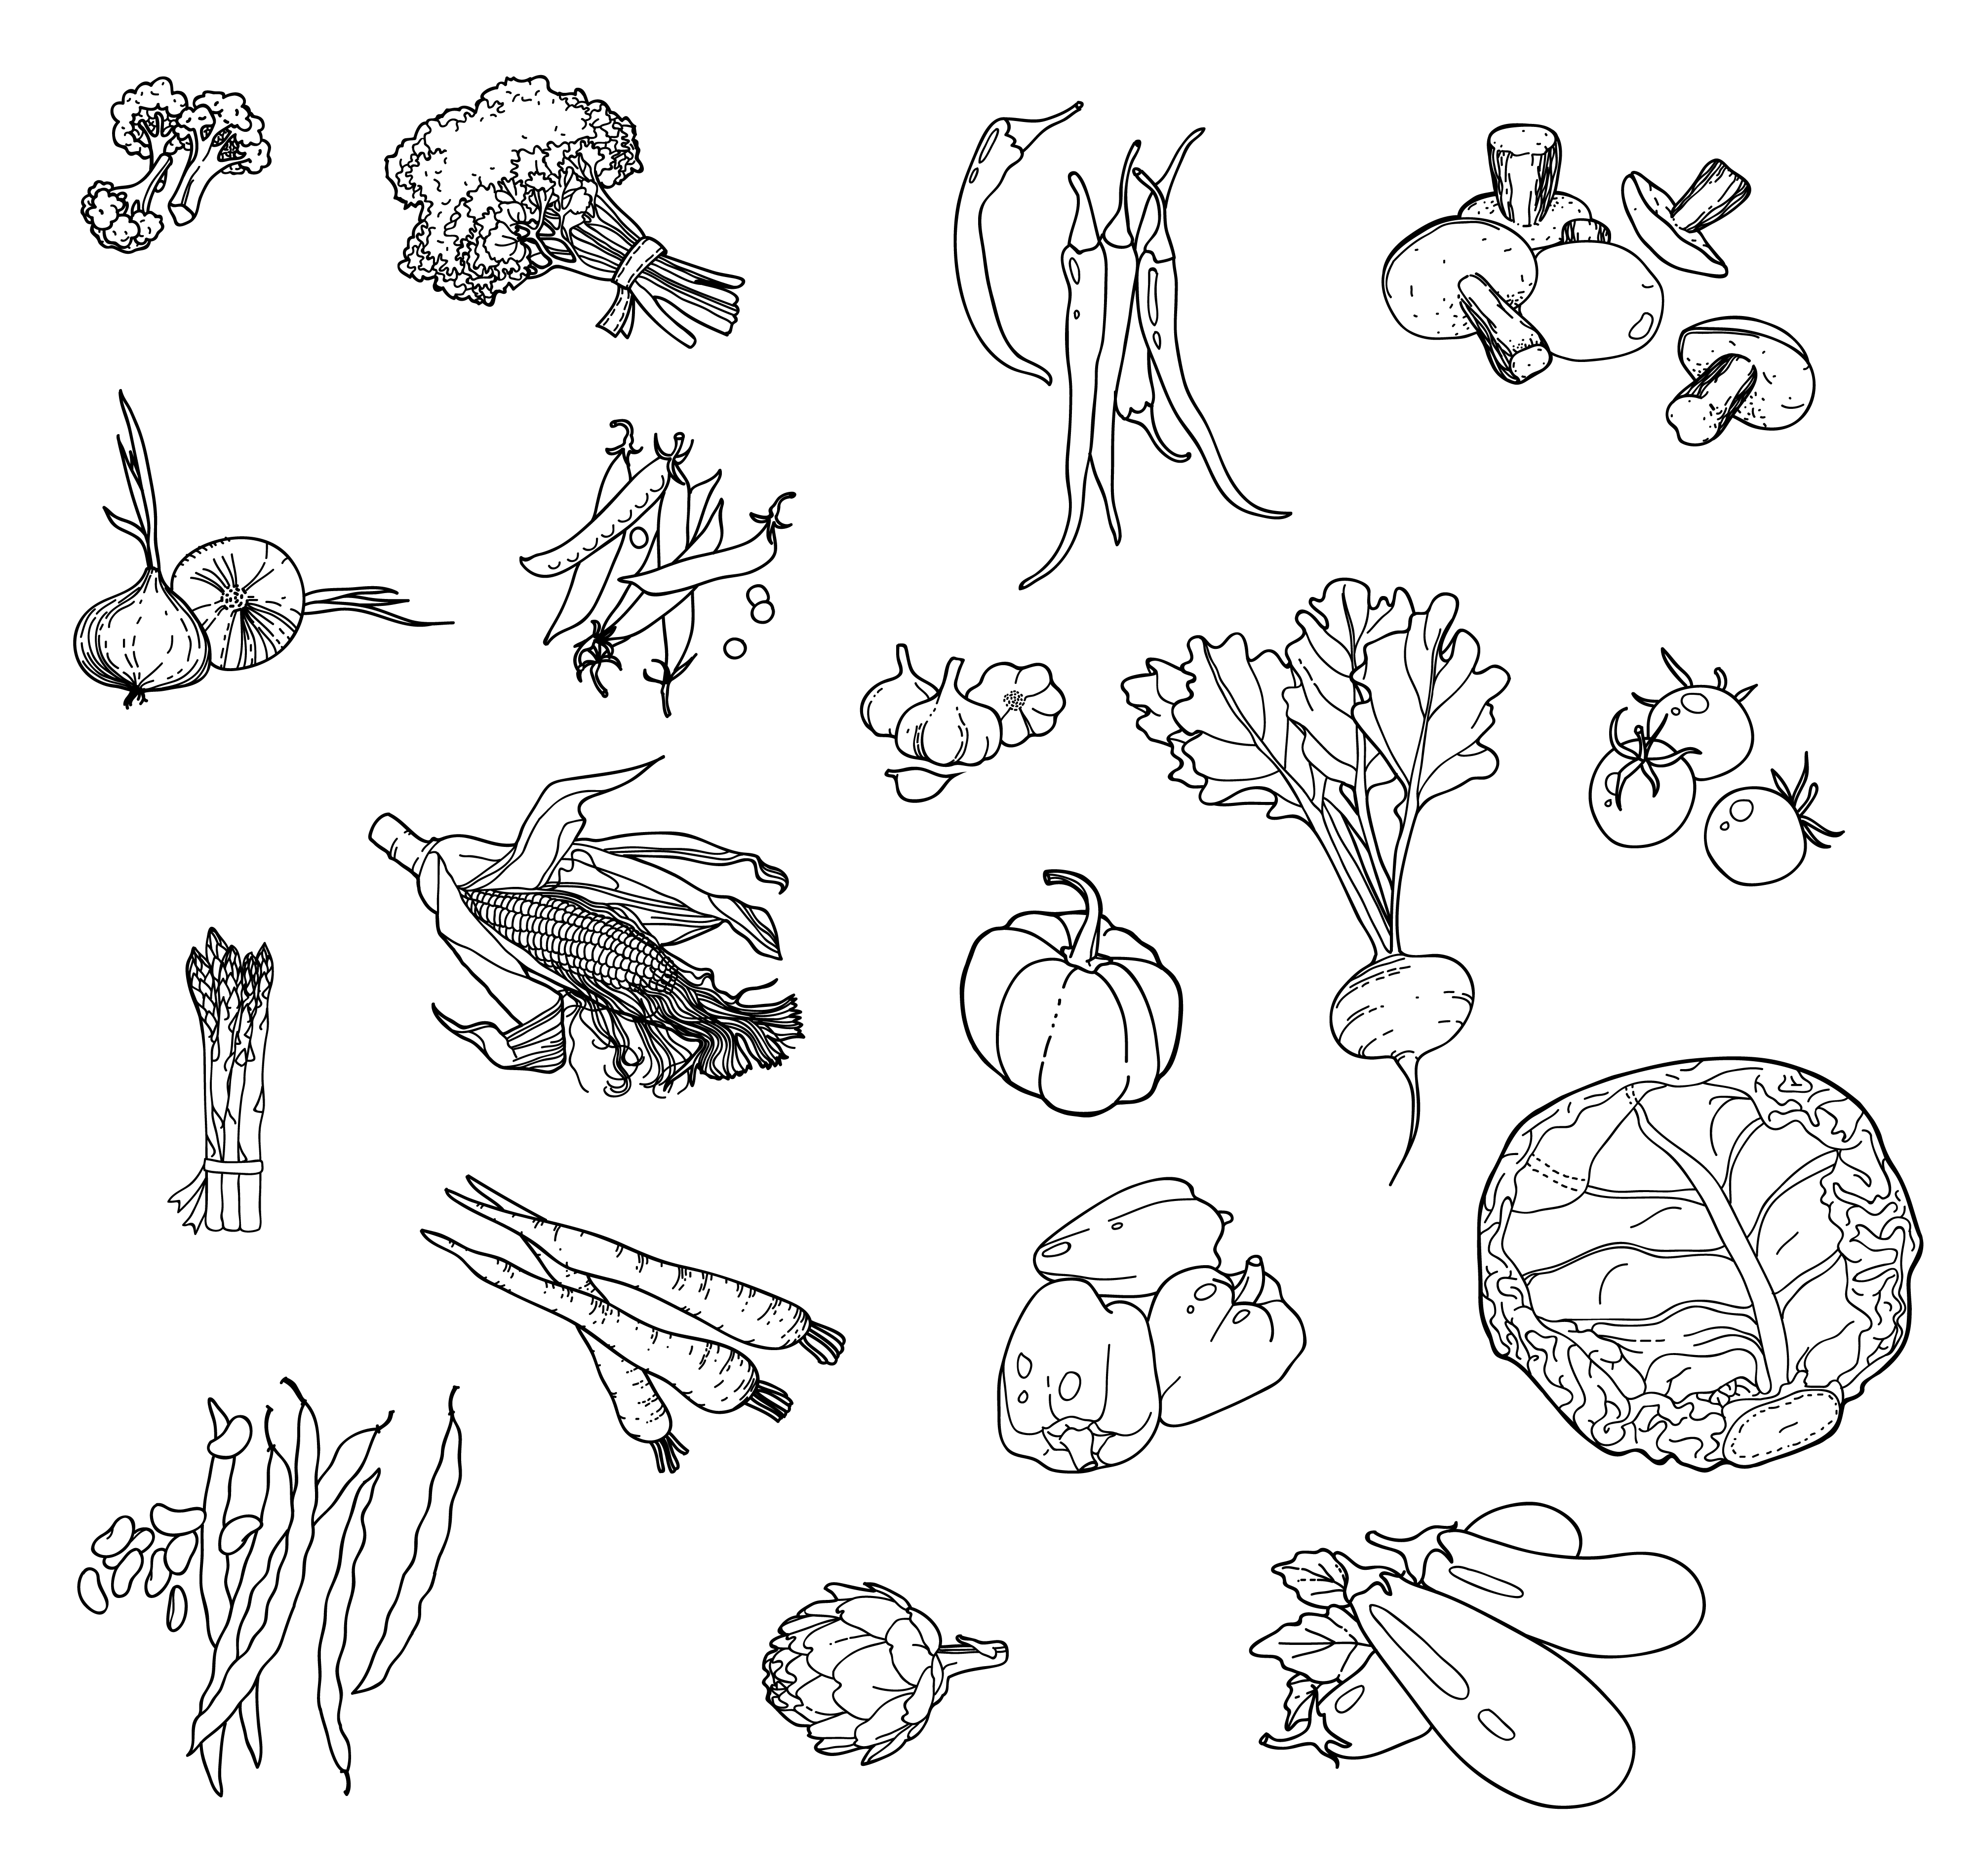 Picture shows drawn vegetables. Designed by veraholera / Freepik